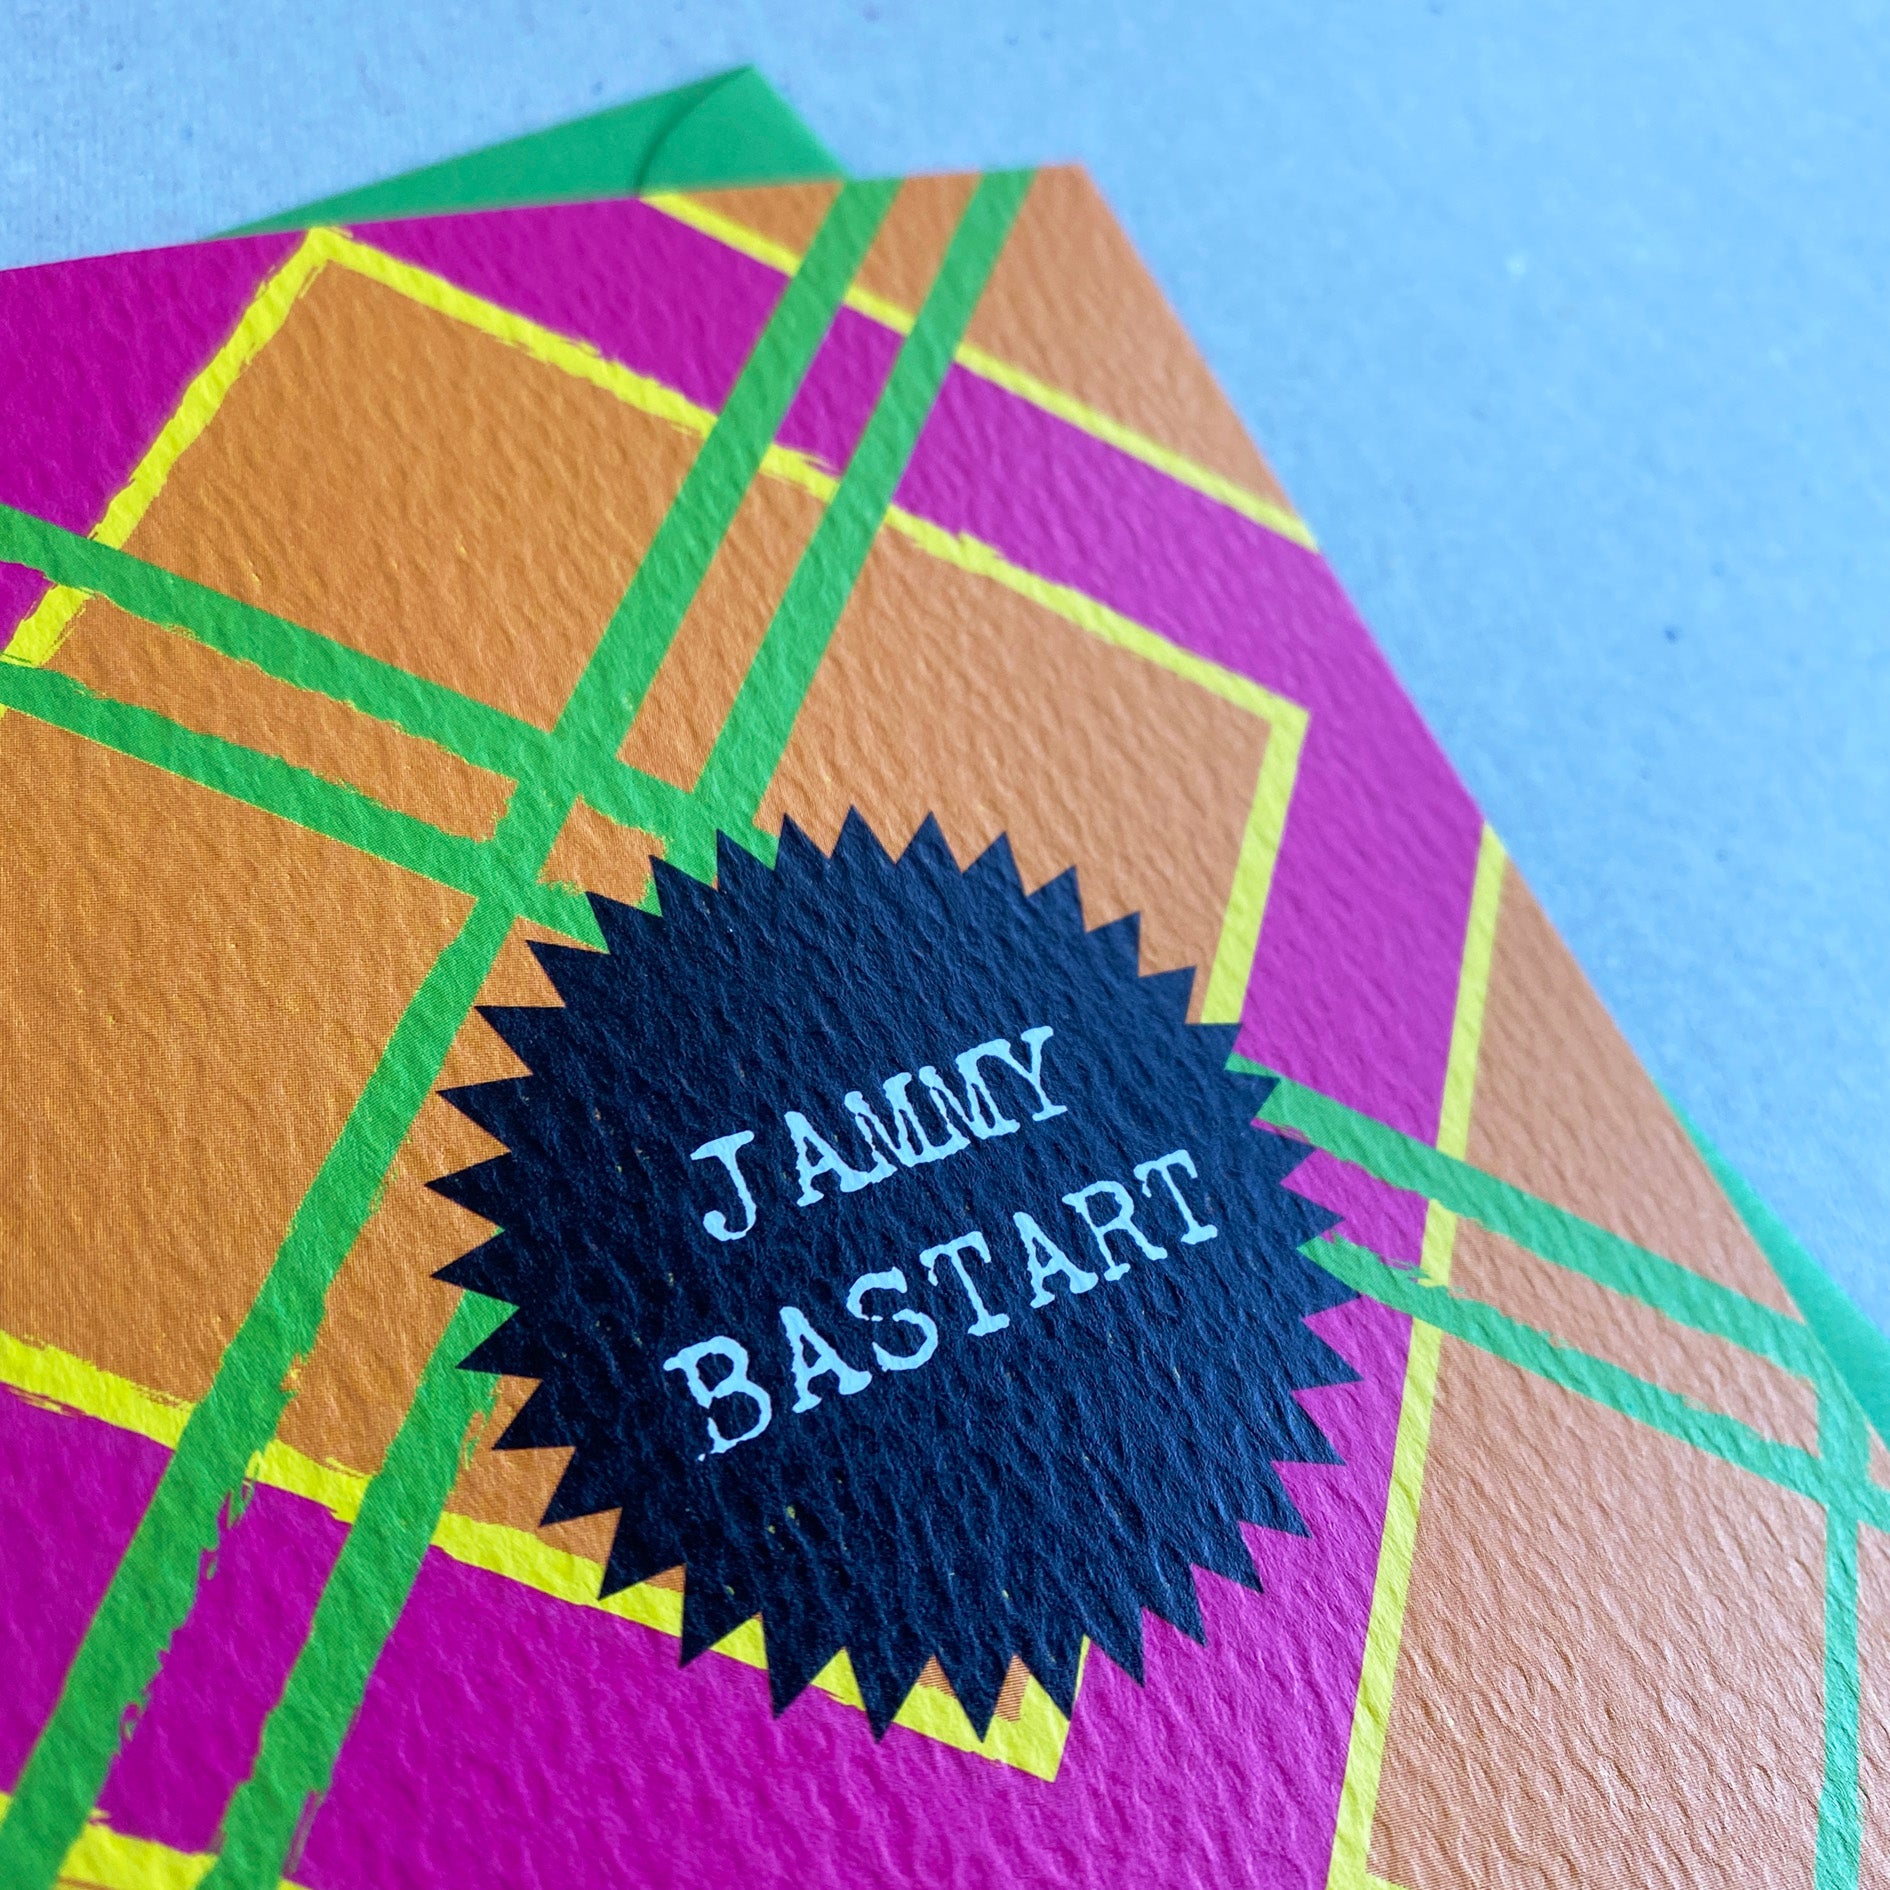 'Jammy Bastart' Scottish Insult Card - HiyaPal